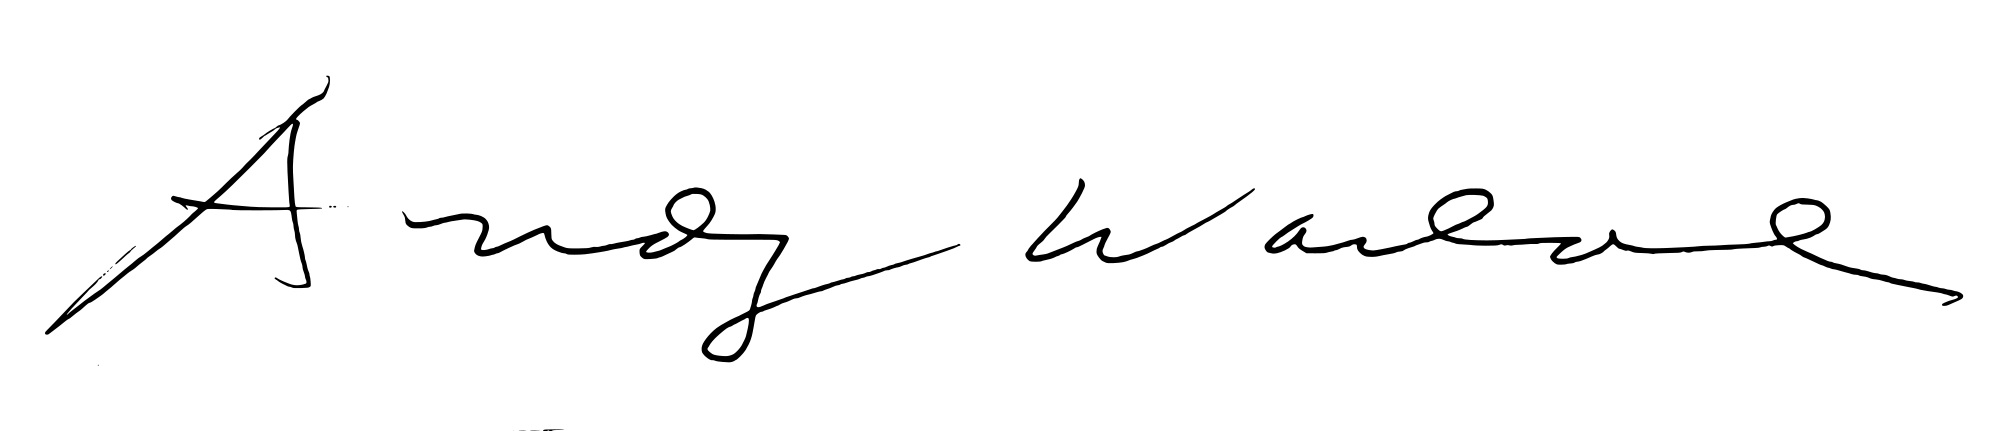 Andy Warhol Logo - File:Andy Warhol signature.svg - Wikimedia Commons